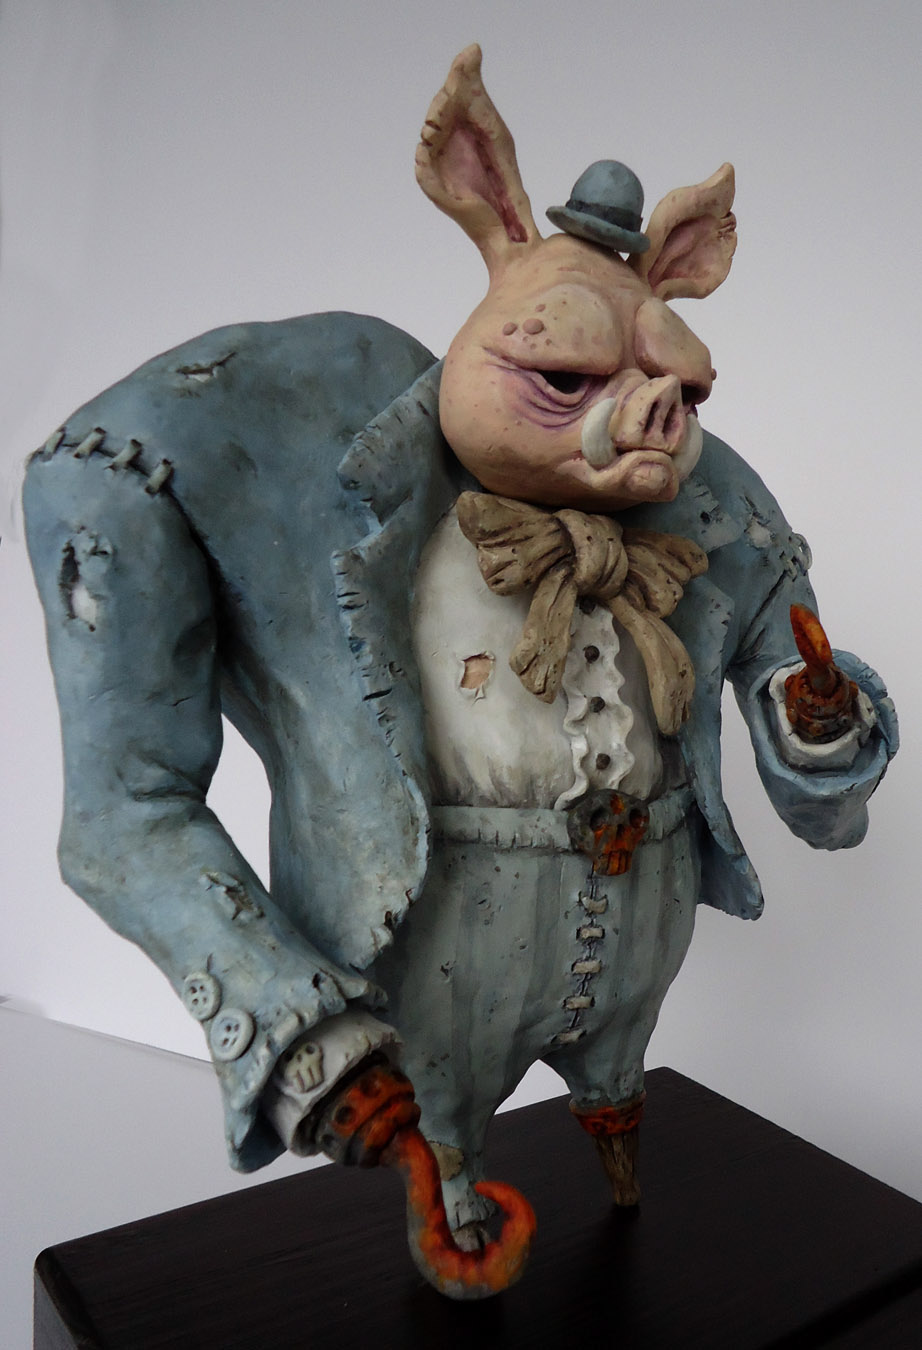 zombie toys fine art model animals sculpture Character craft illustrations pig HOG fantasy STEAMPUNK pop surrealism